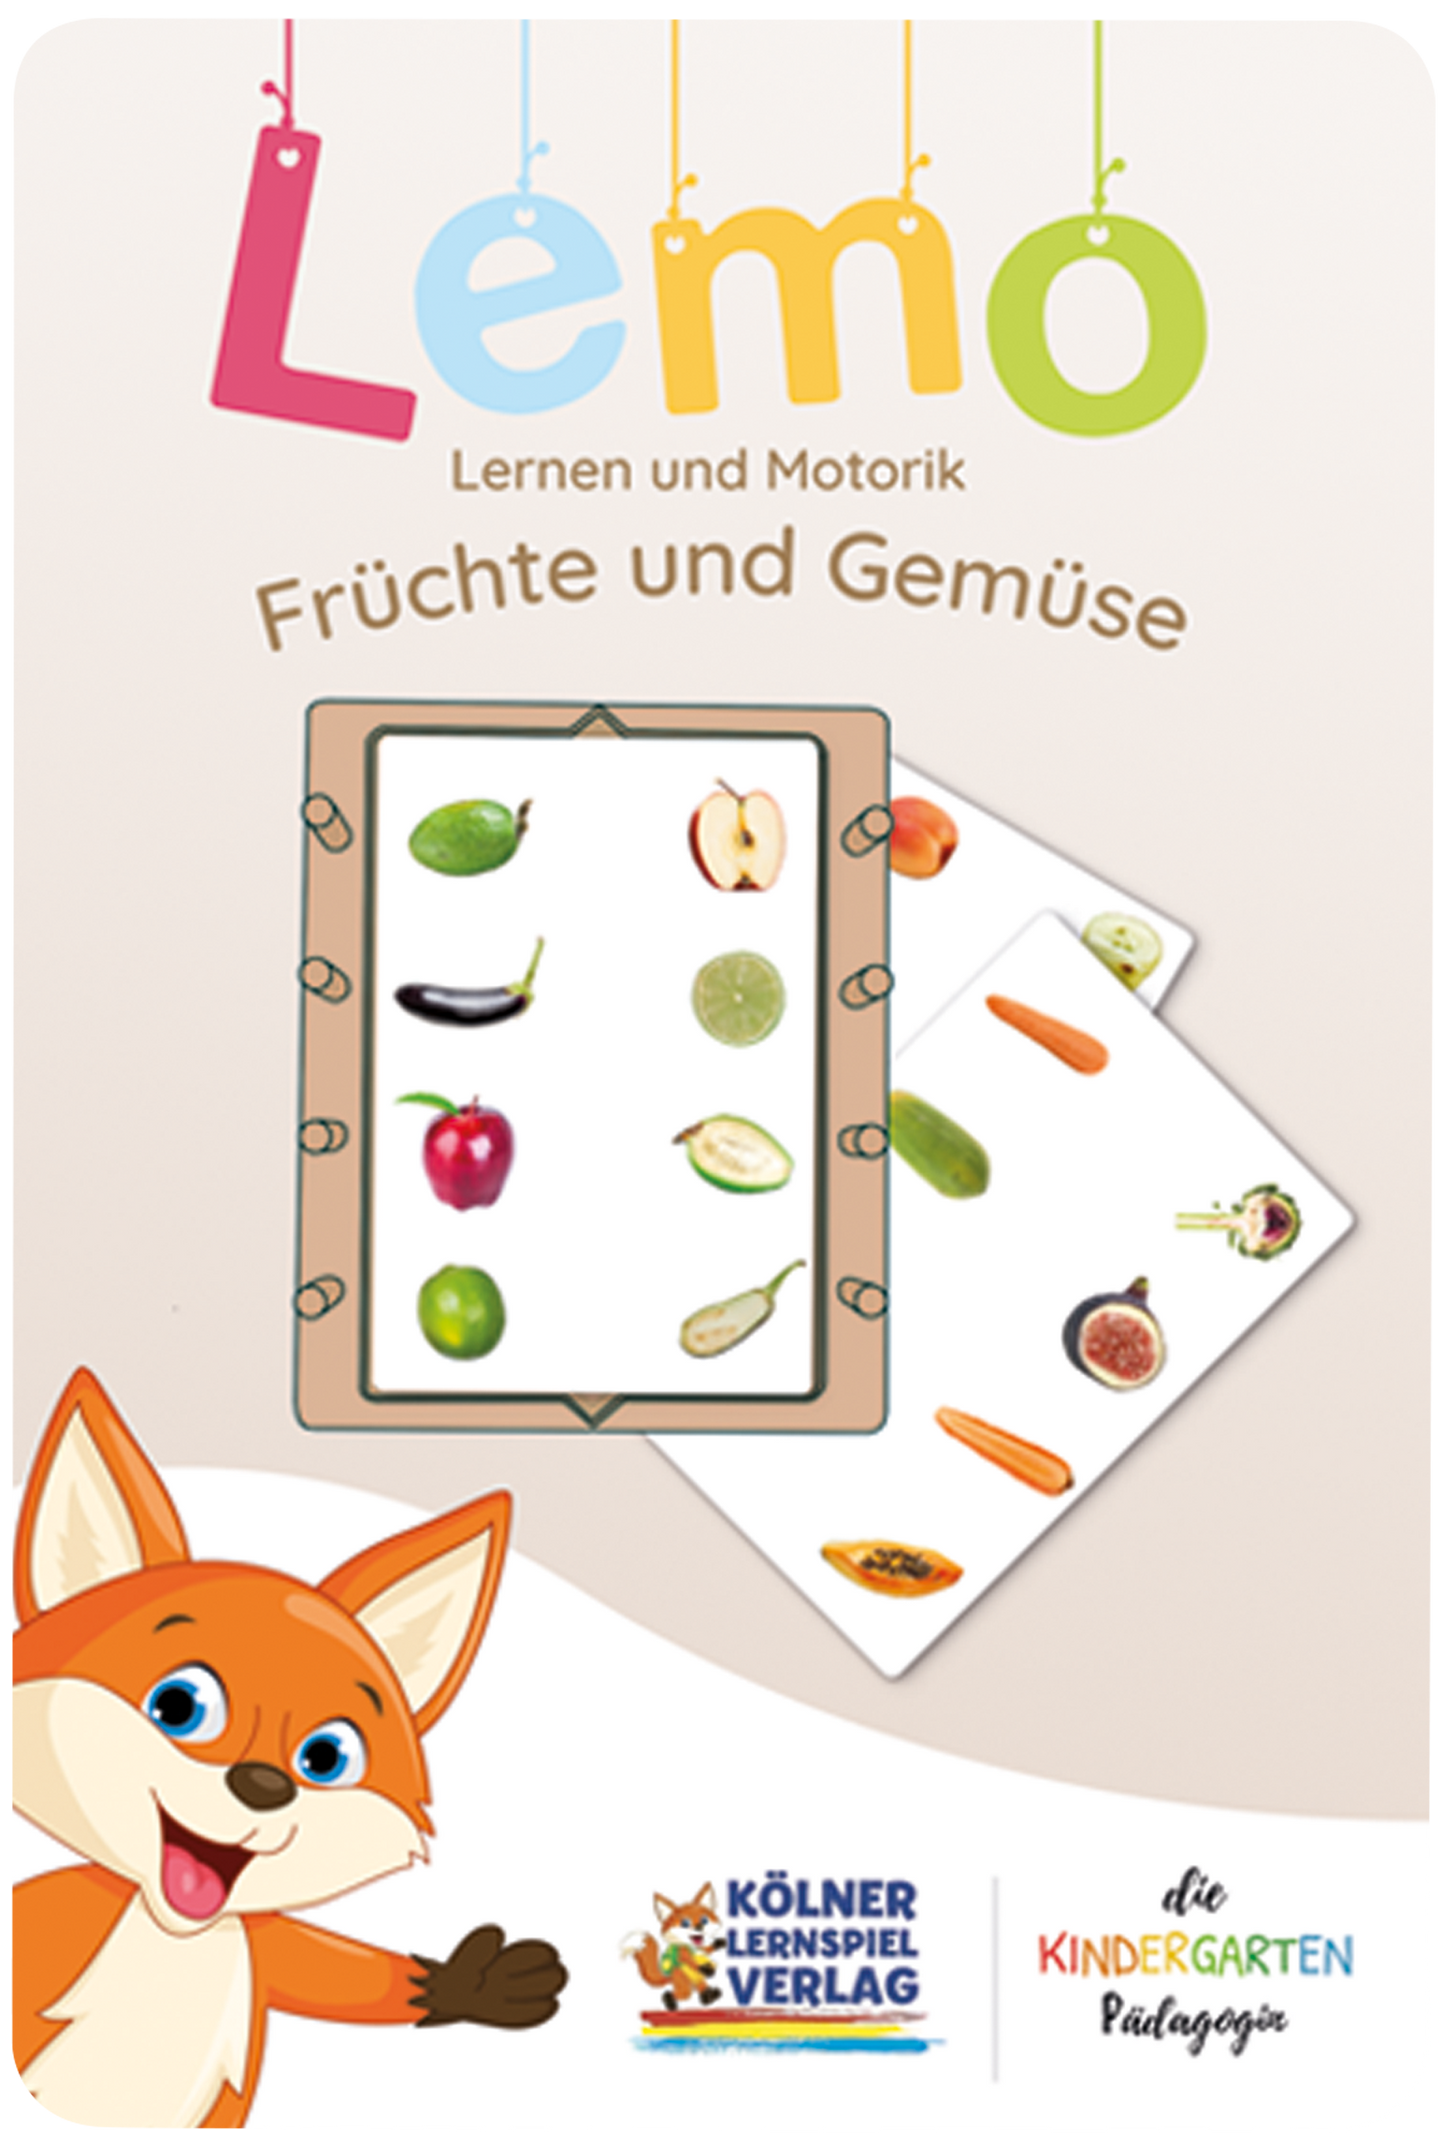 Lemo deck of cards fruits and vegetables